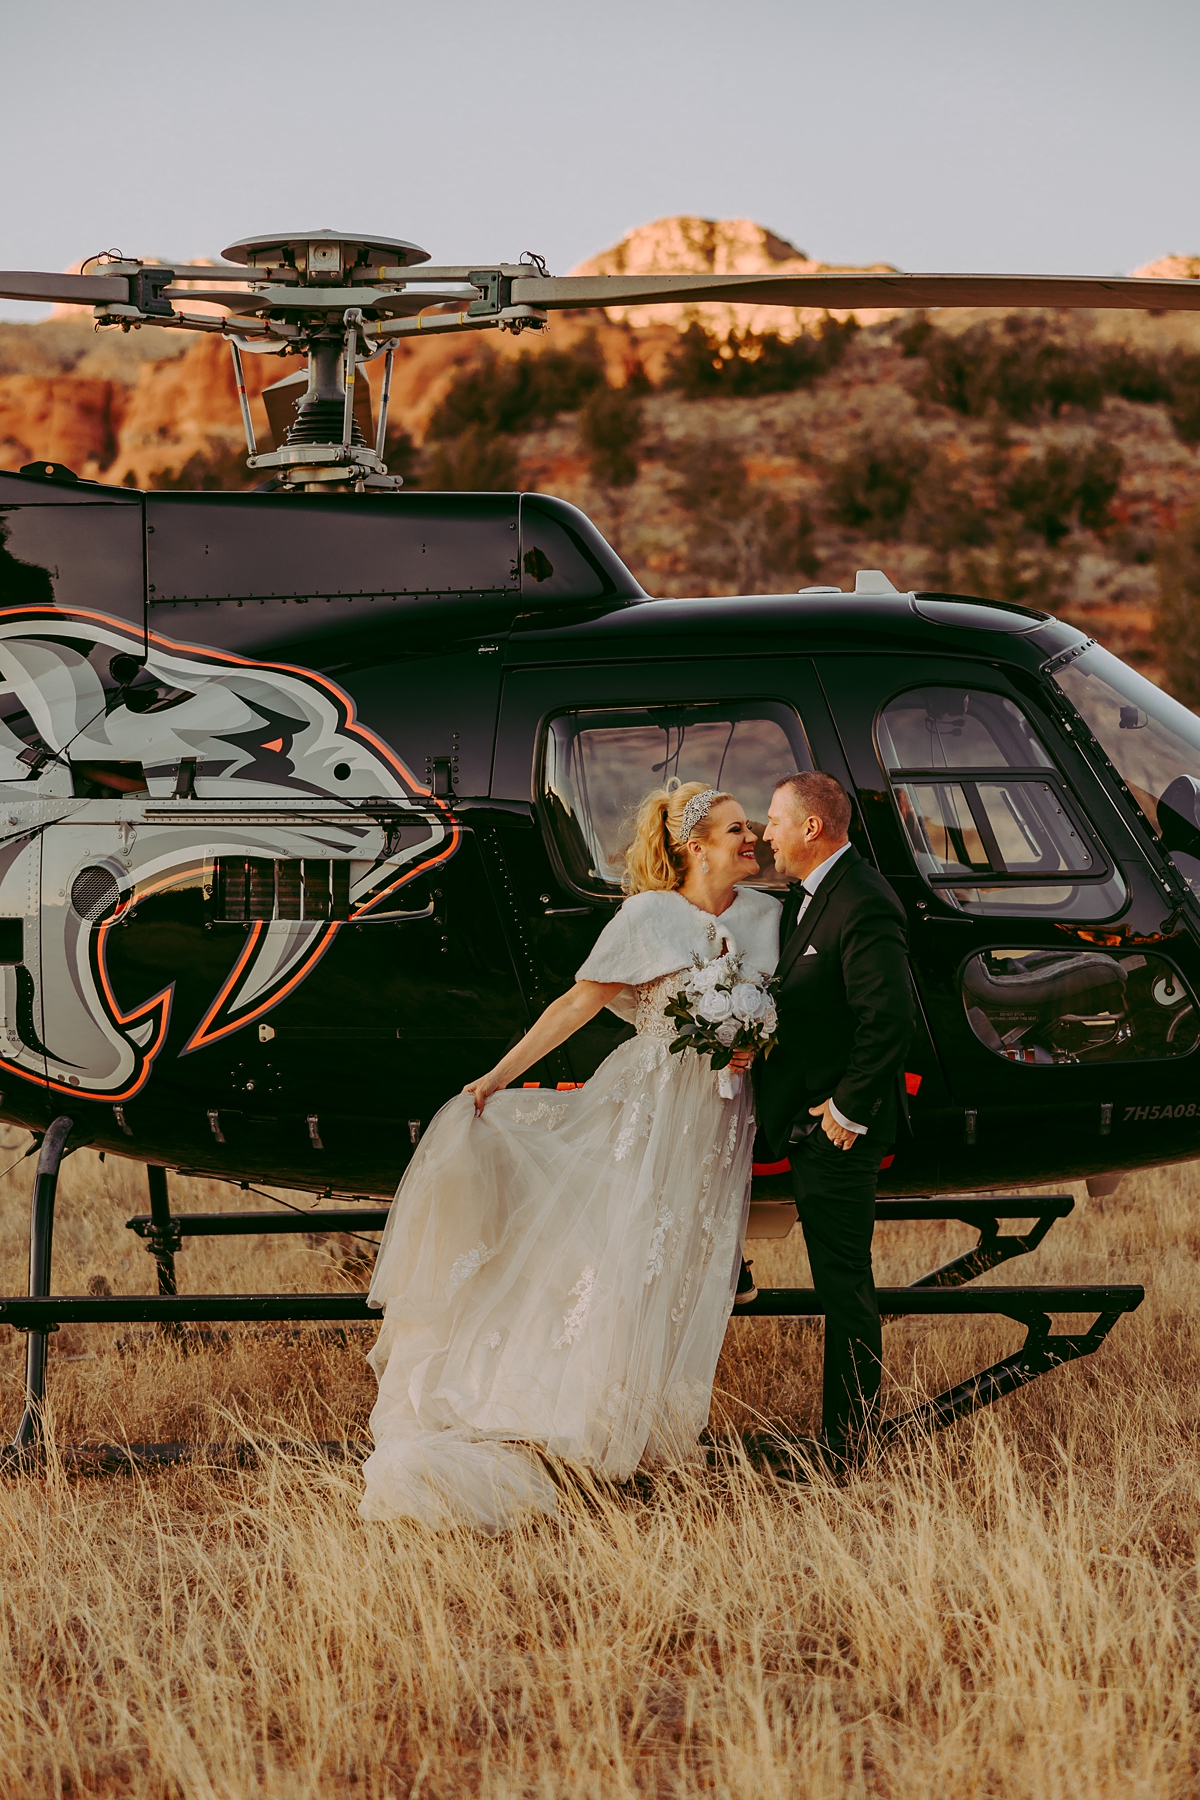 2-day-sedona-helicopter-elopement-adventure-102.jpg